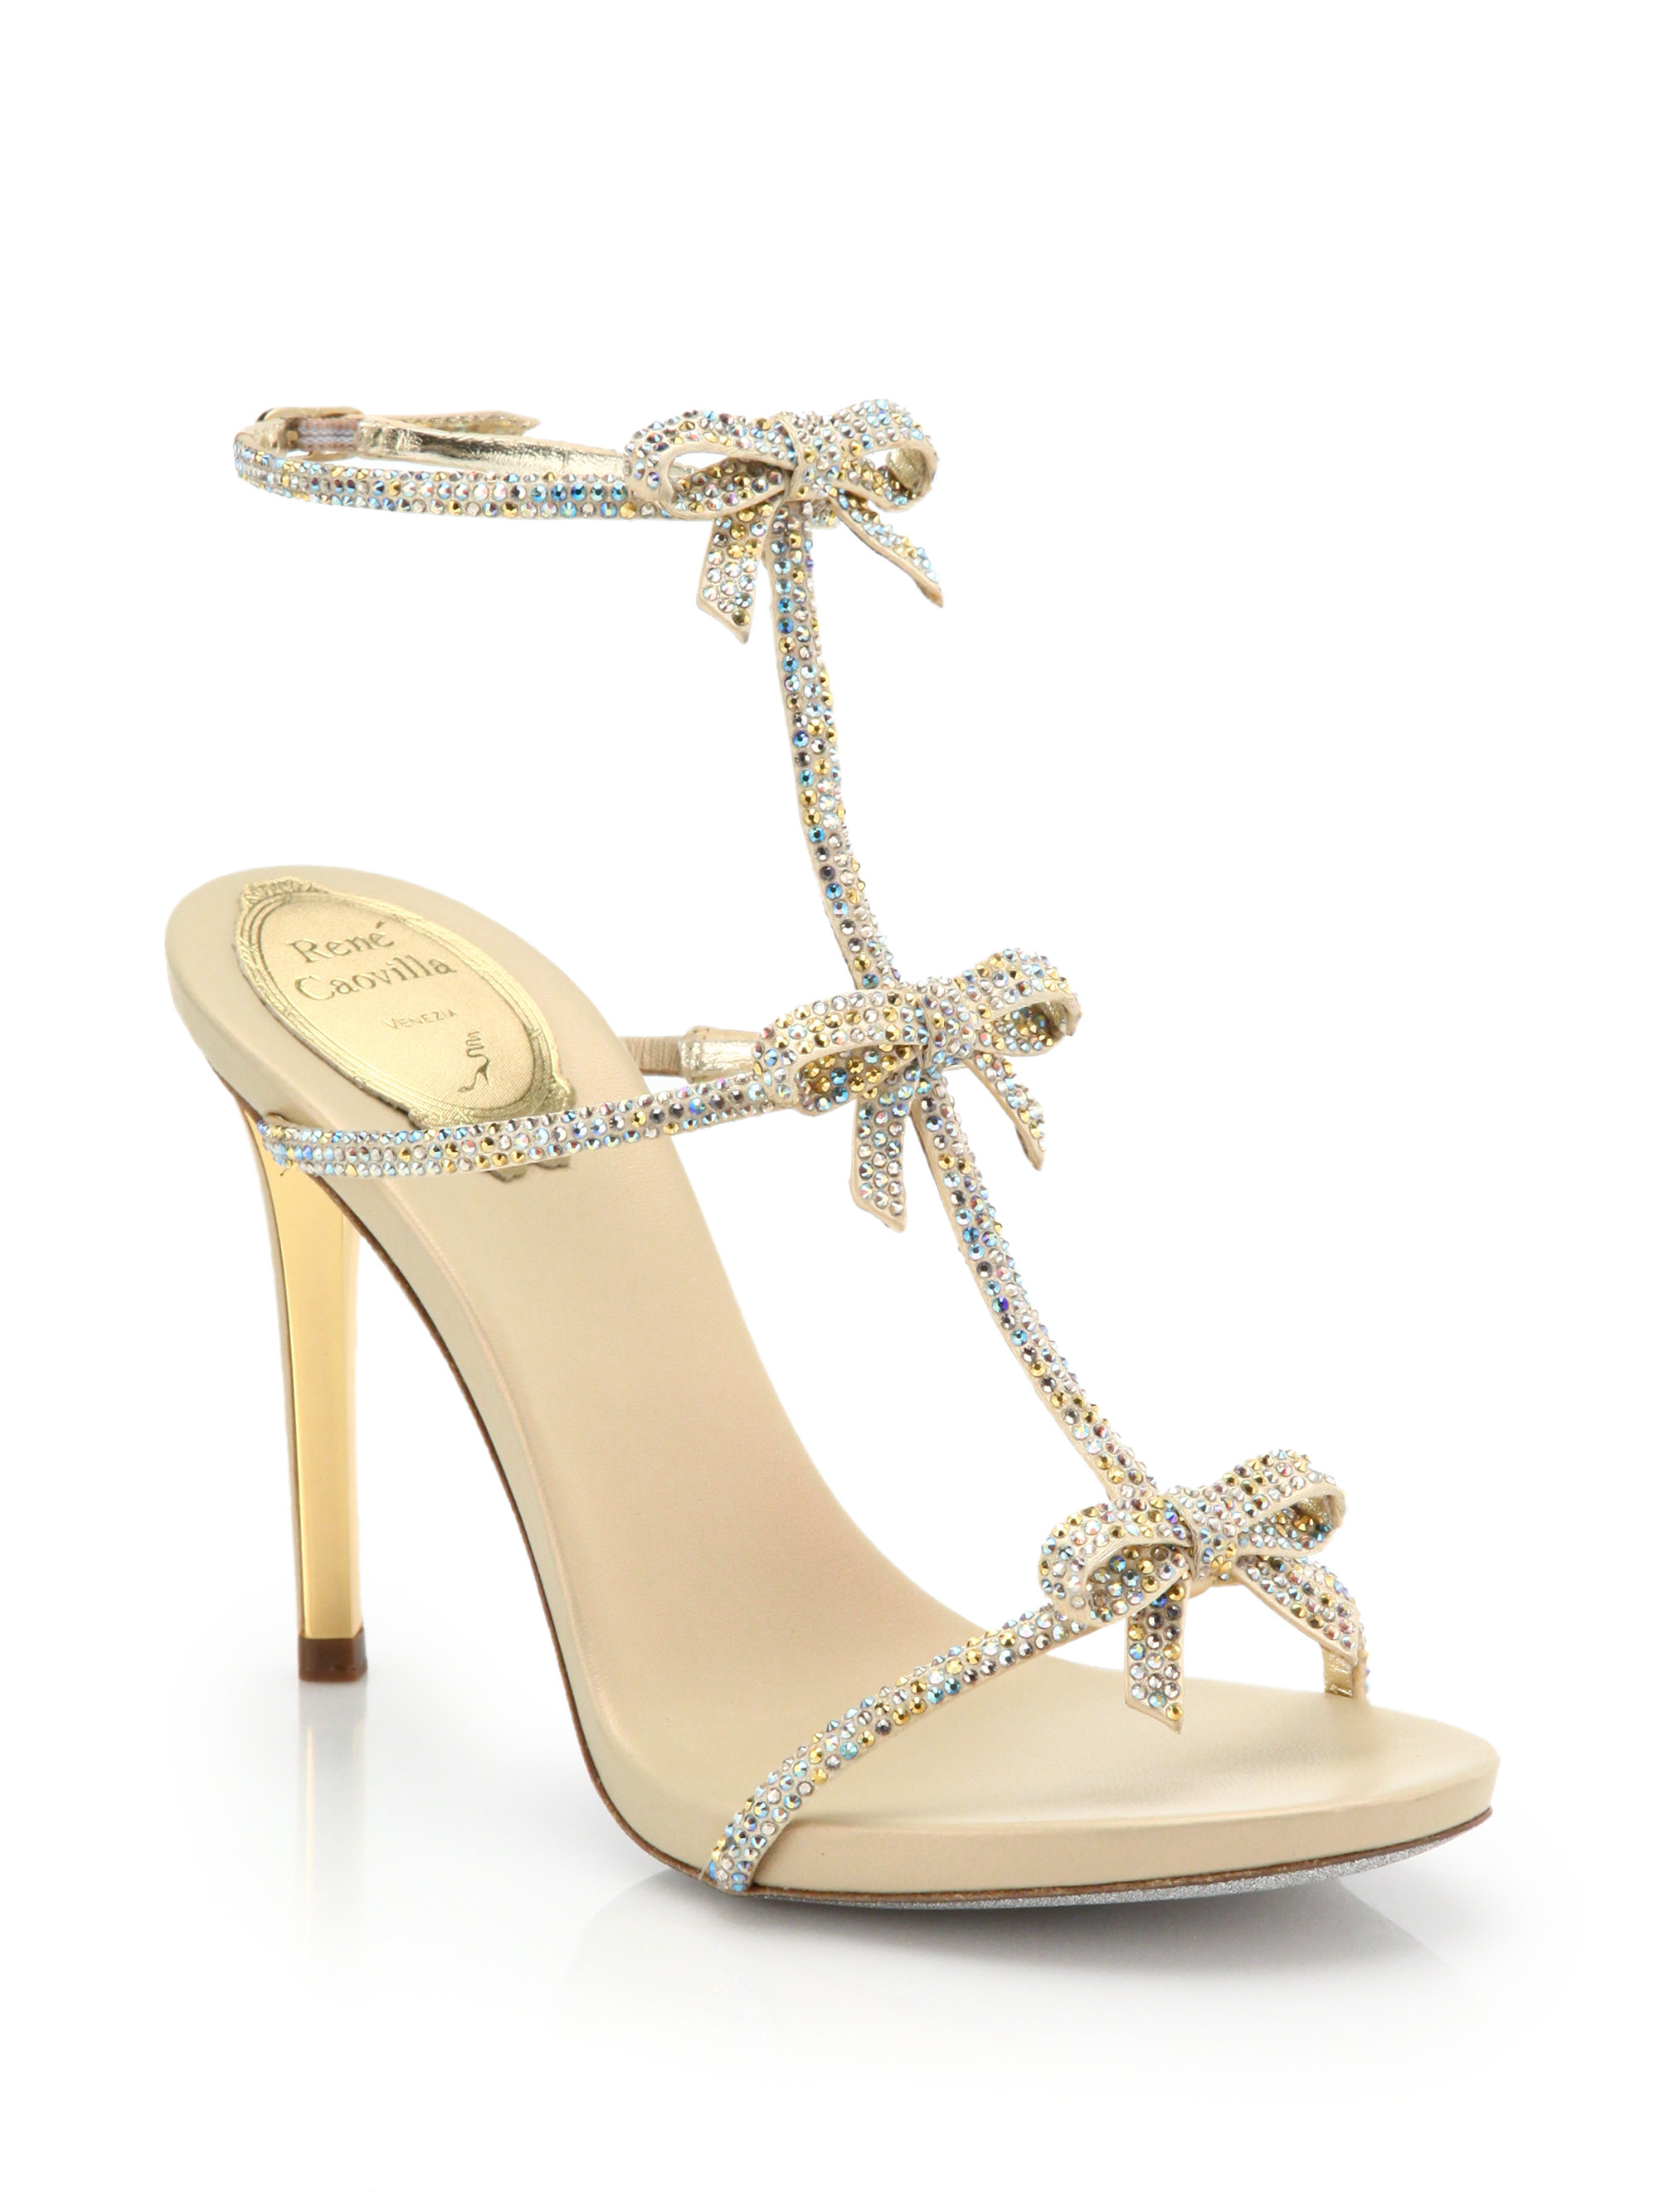 Rene Caovilla Strass Swarovski Crystal Bow Sandals in Gold (Metallic) | Lyst